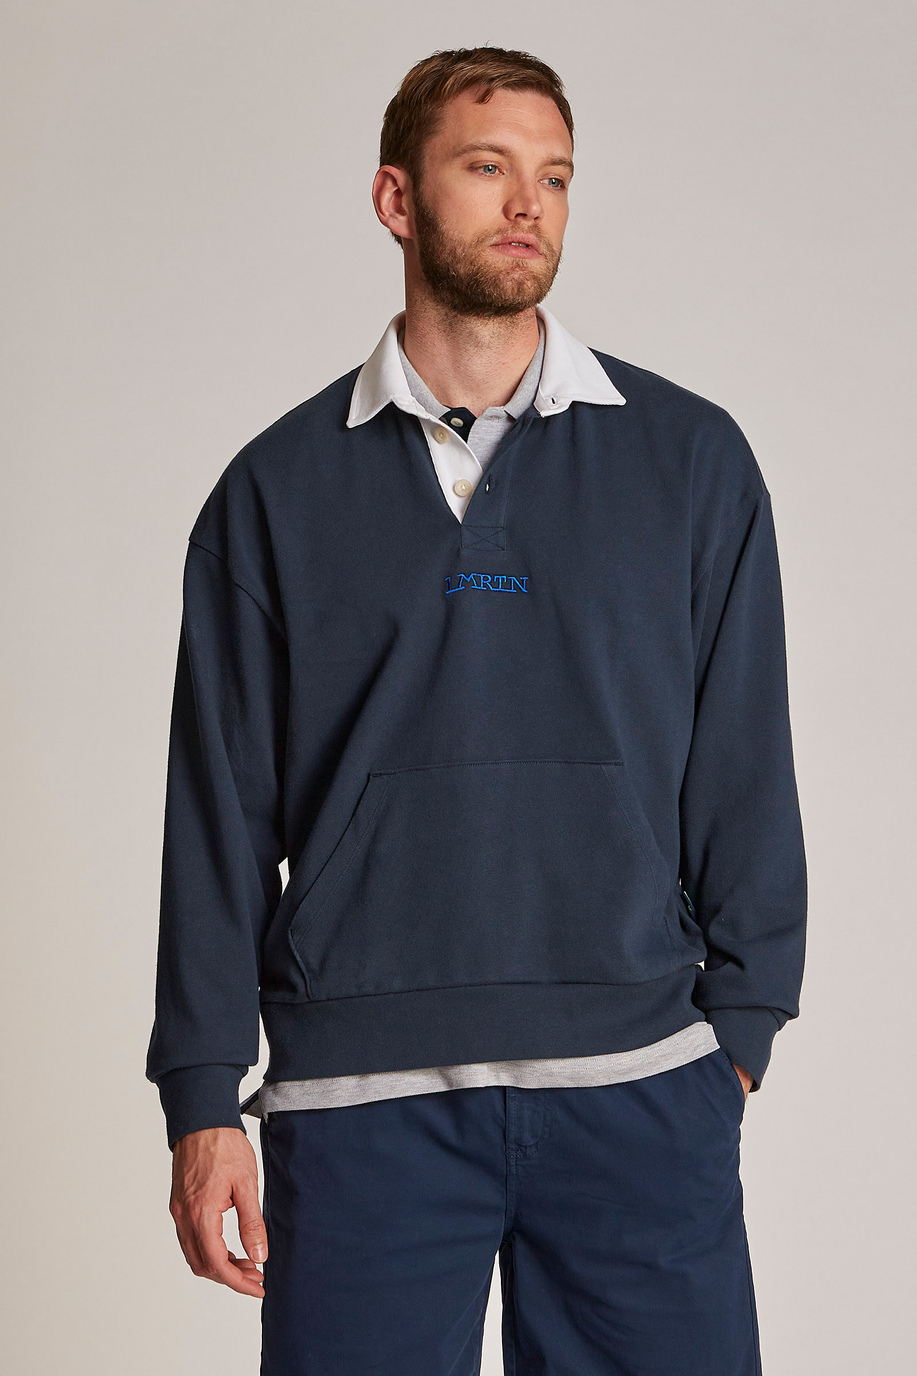 Men's oversized 100% cotton sweatshirt featuring a contrasting collar | La Martina - Official Online Shop